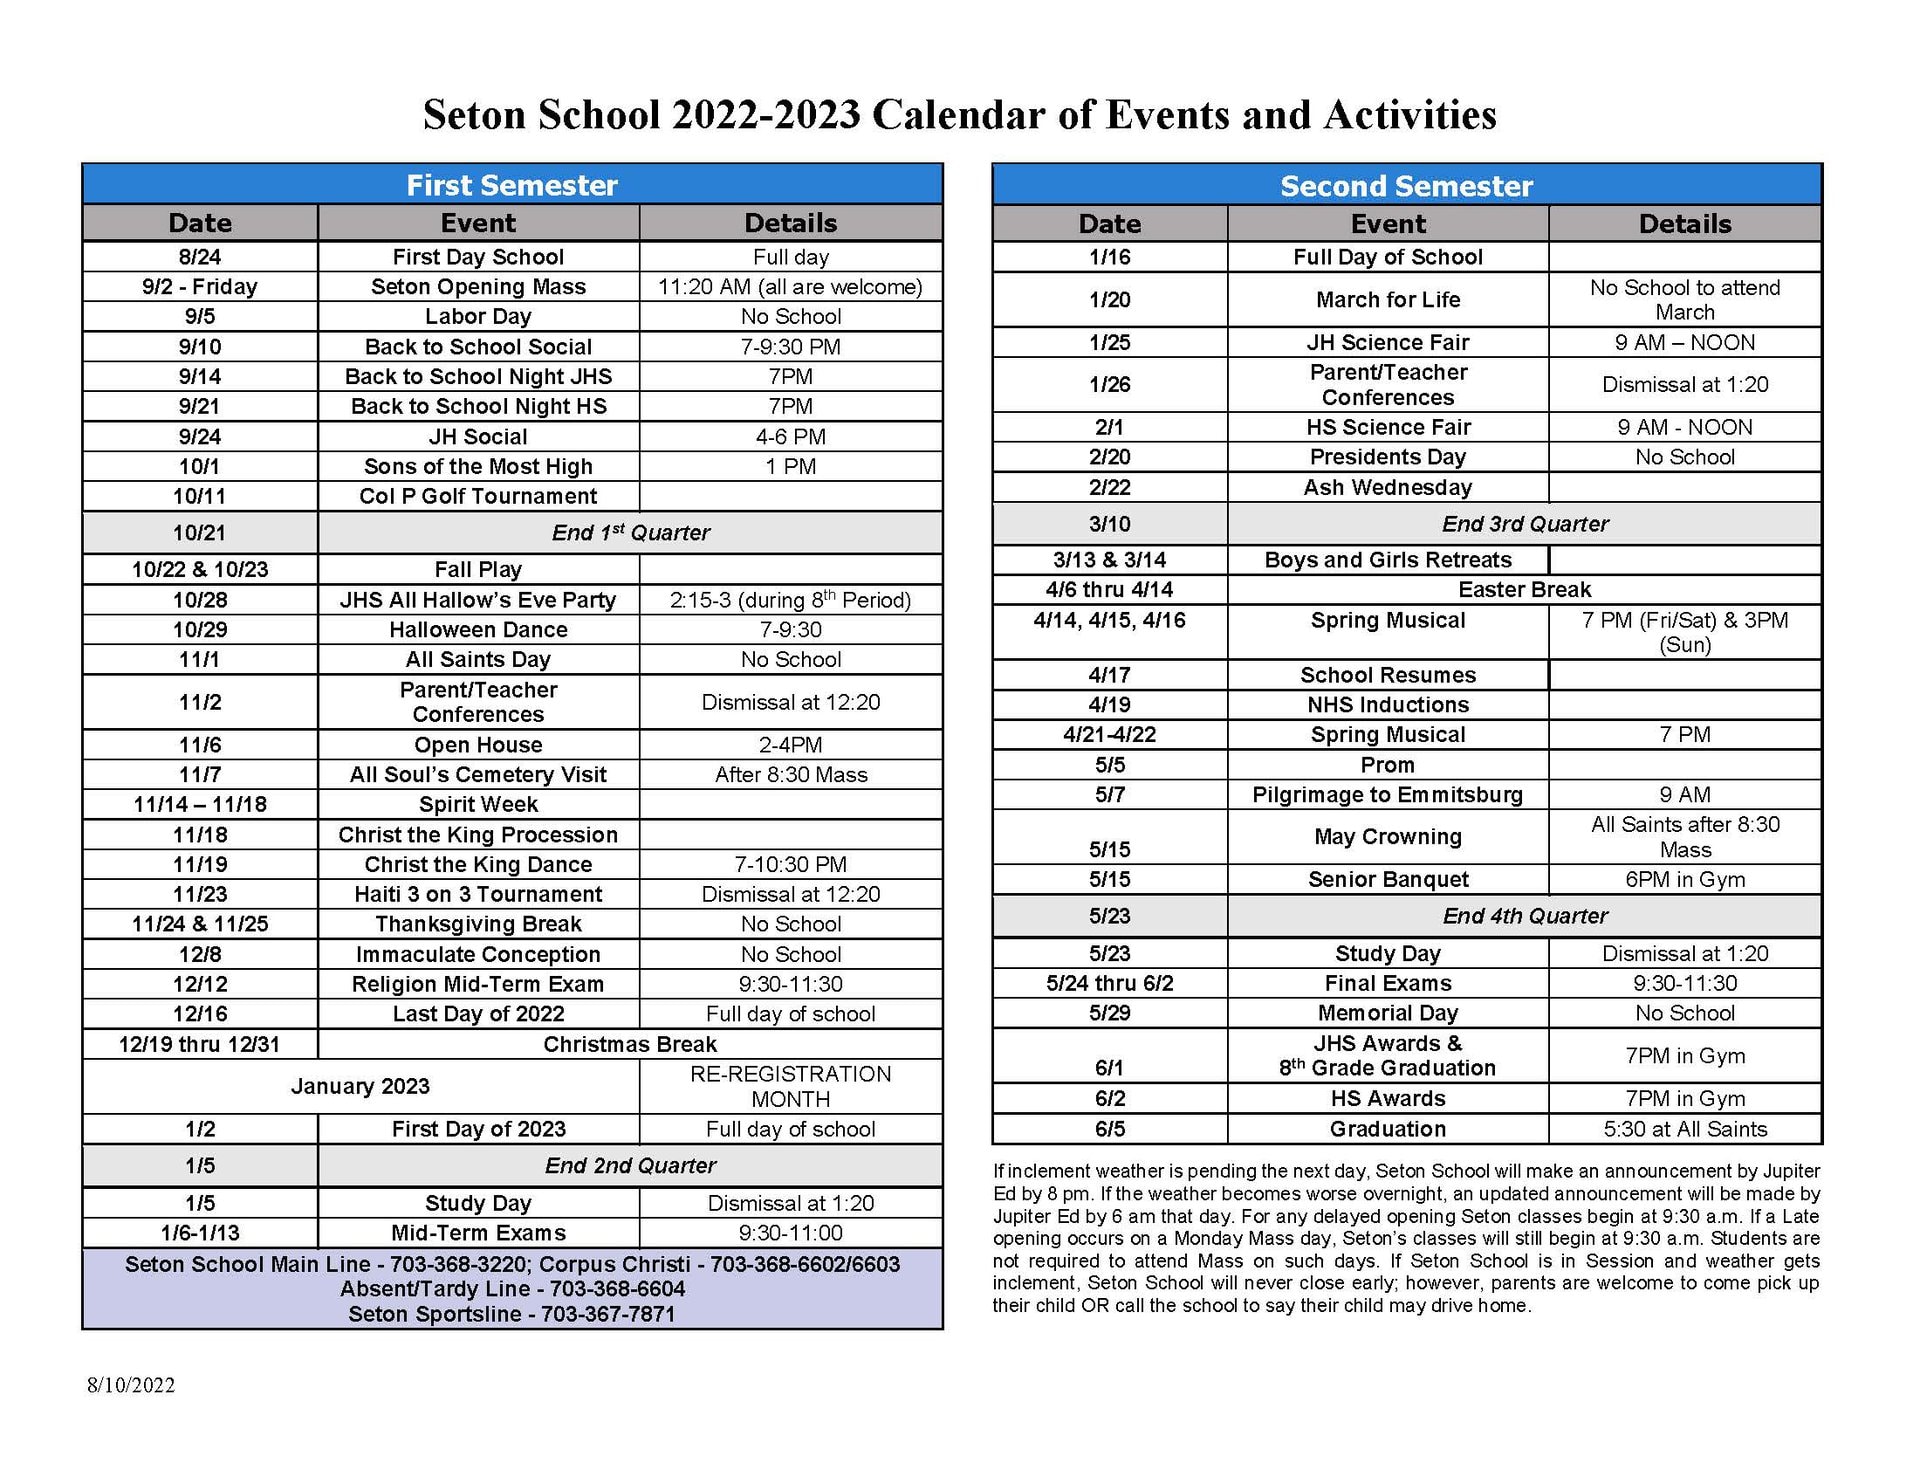 2022-2023-seton-school-calendar-of-events-and-activities-seton-school-manassas